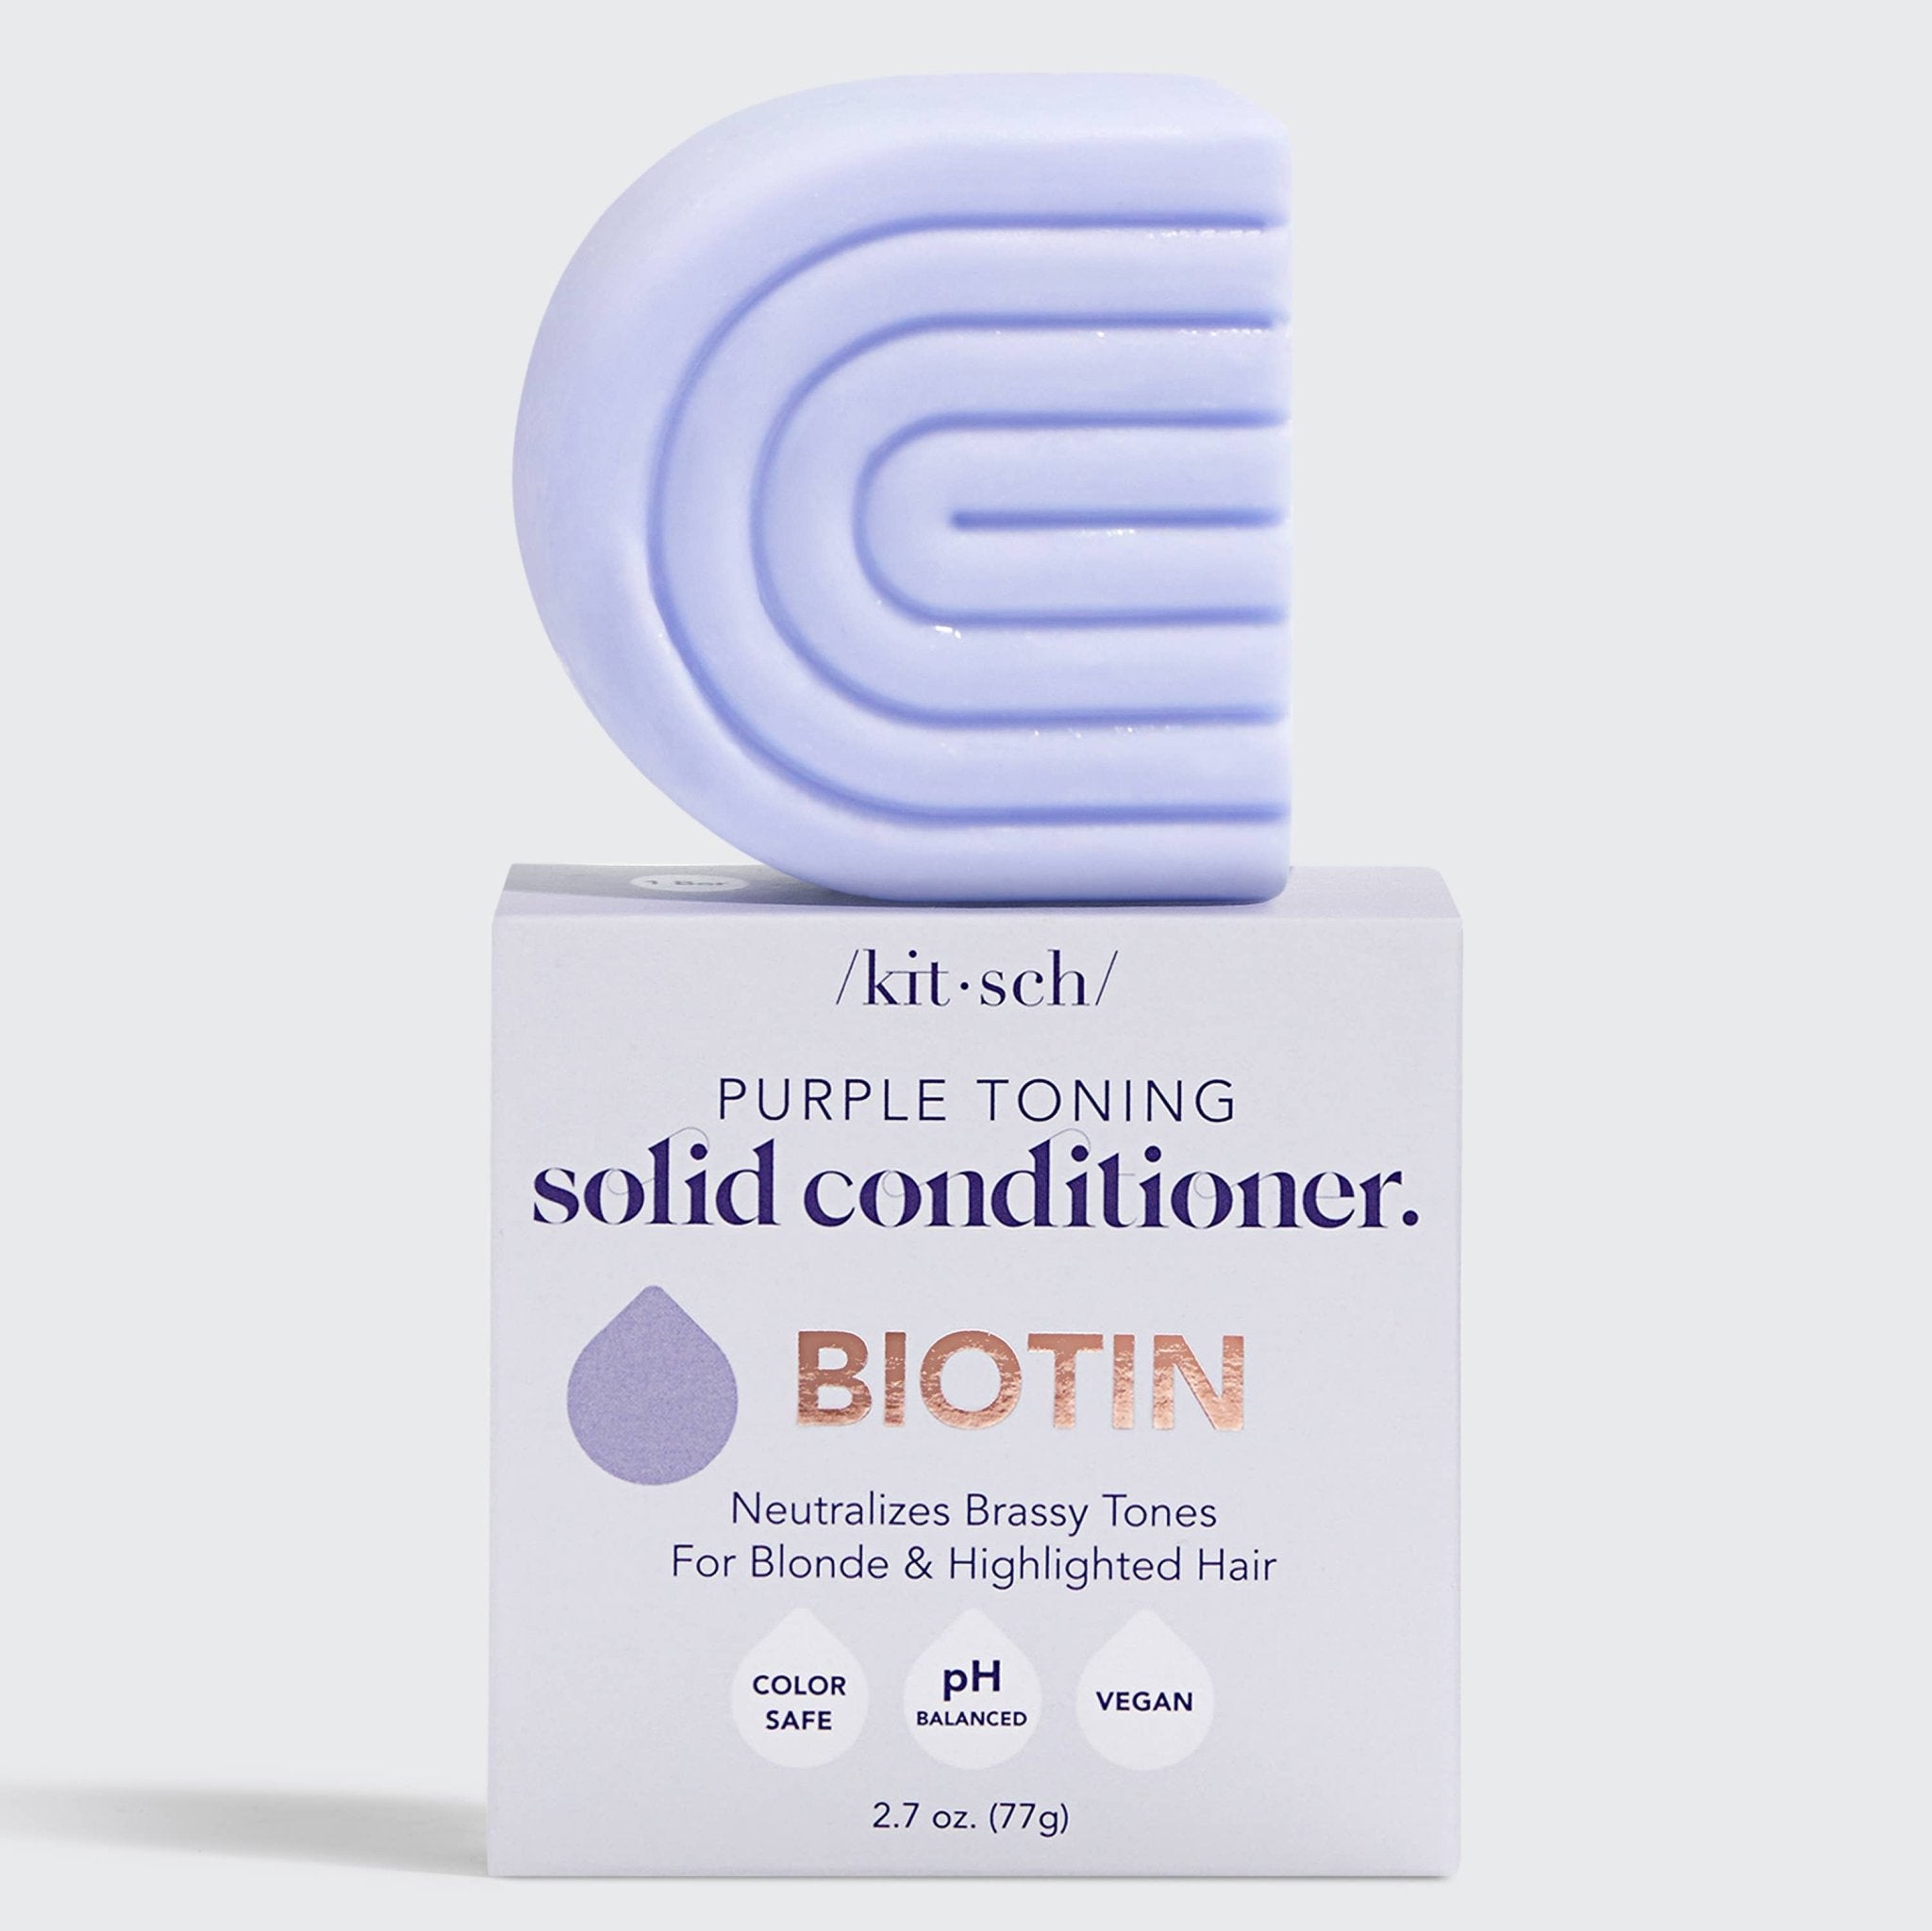 KITSCH Purple Toning Conditioner Bar With Biotin